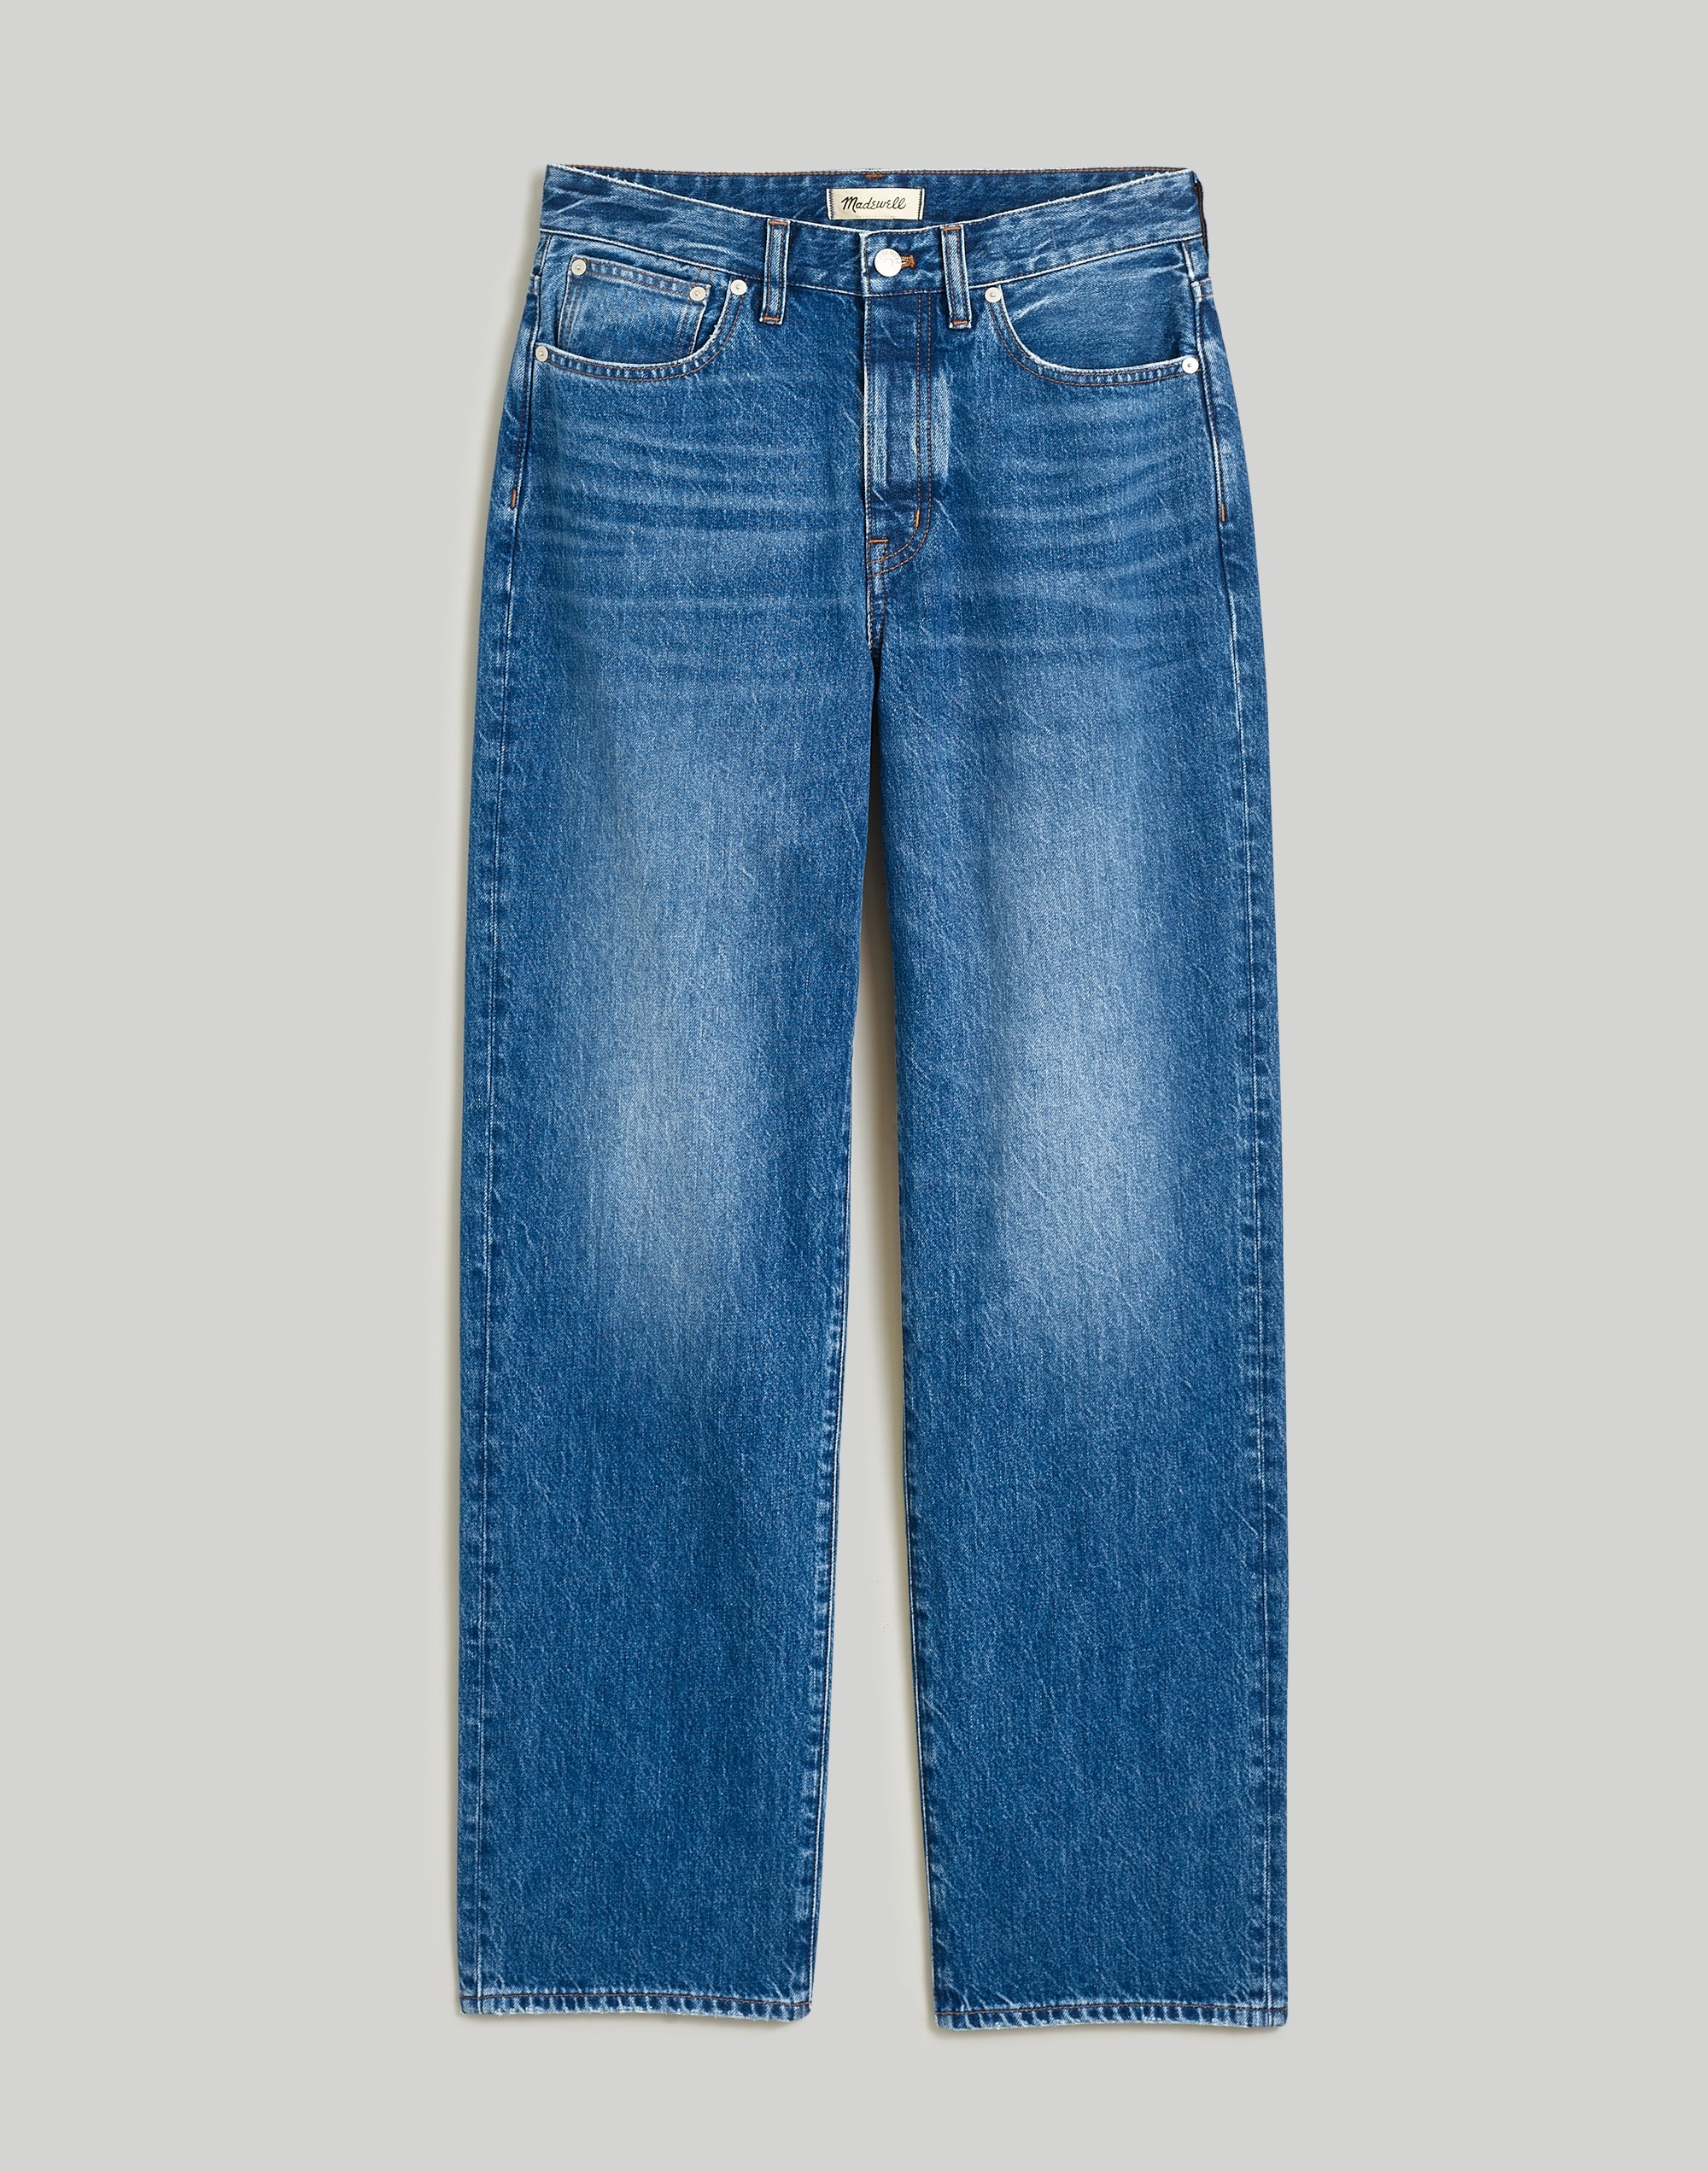 Curvy Low-Slung Straight Jeans in Palmina Wash: Airy Denim Edition